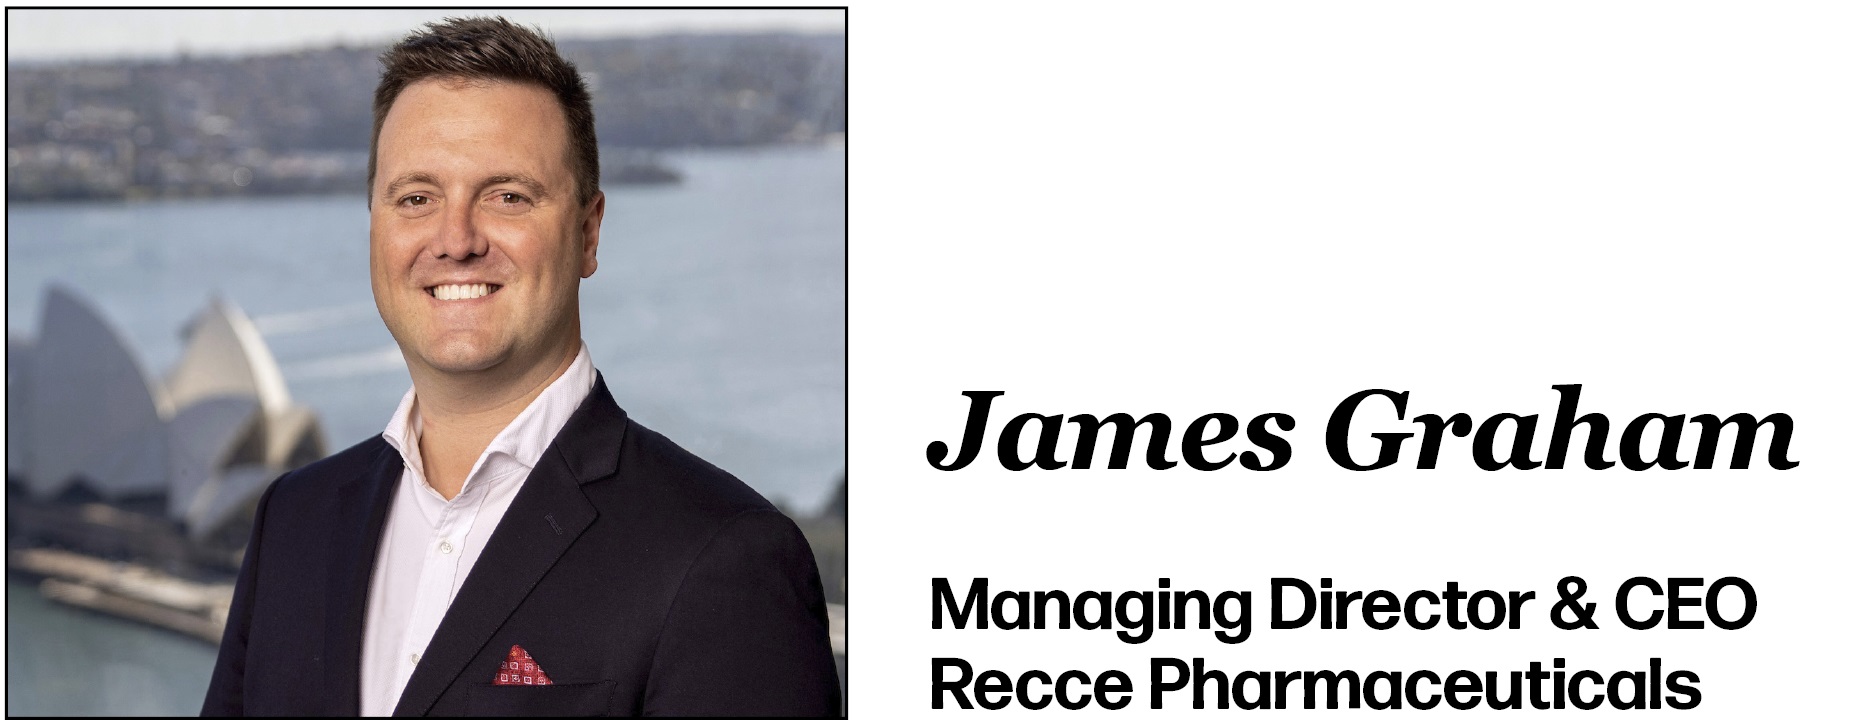 James Graham Managing Director & CEO Recce Pharmaceuticals